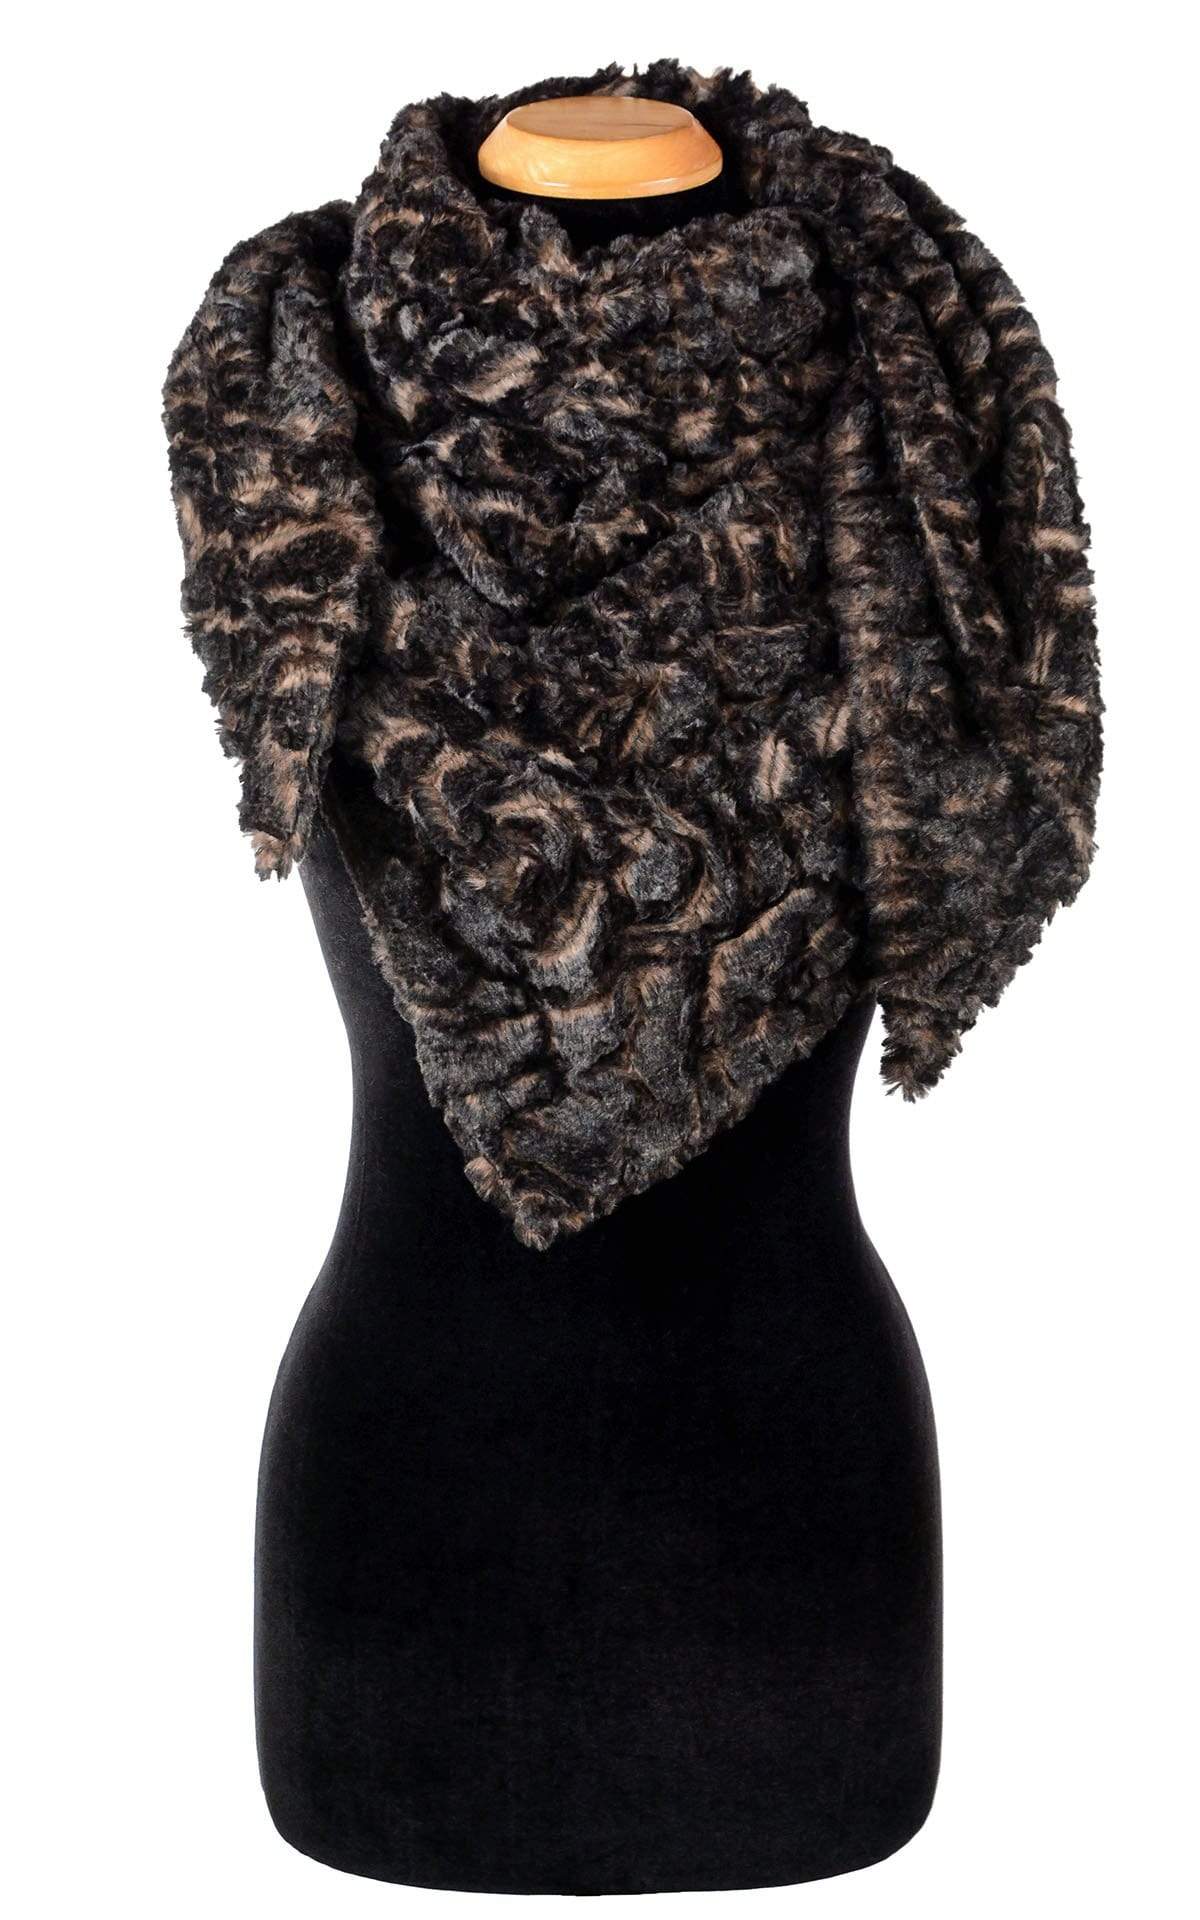 Bermuda triangle scarf | Vintage Rose faux fur | Handmade by Pandemonium Millinery Seattle, WA USA